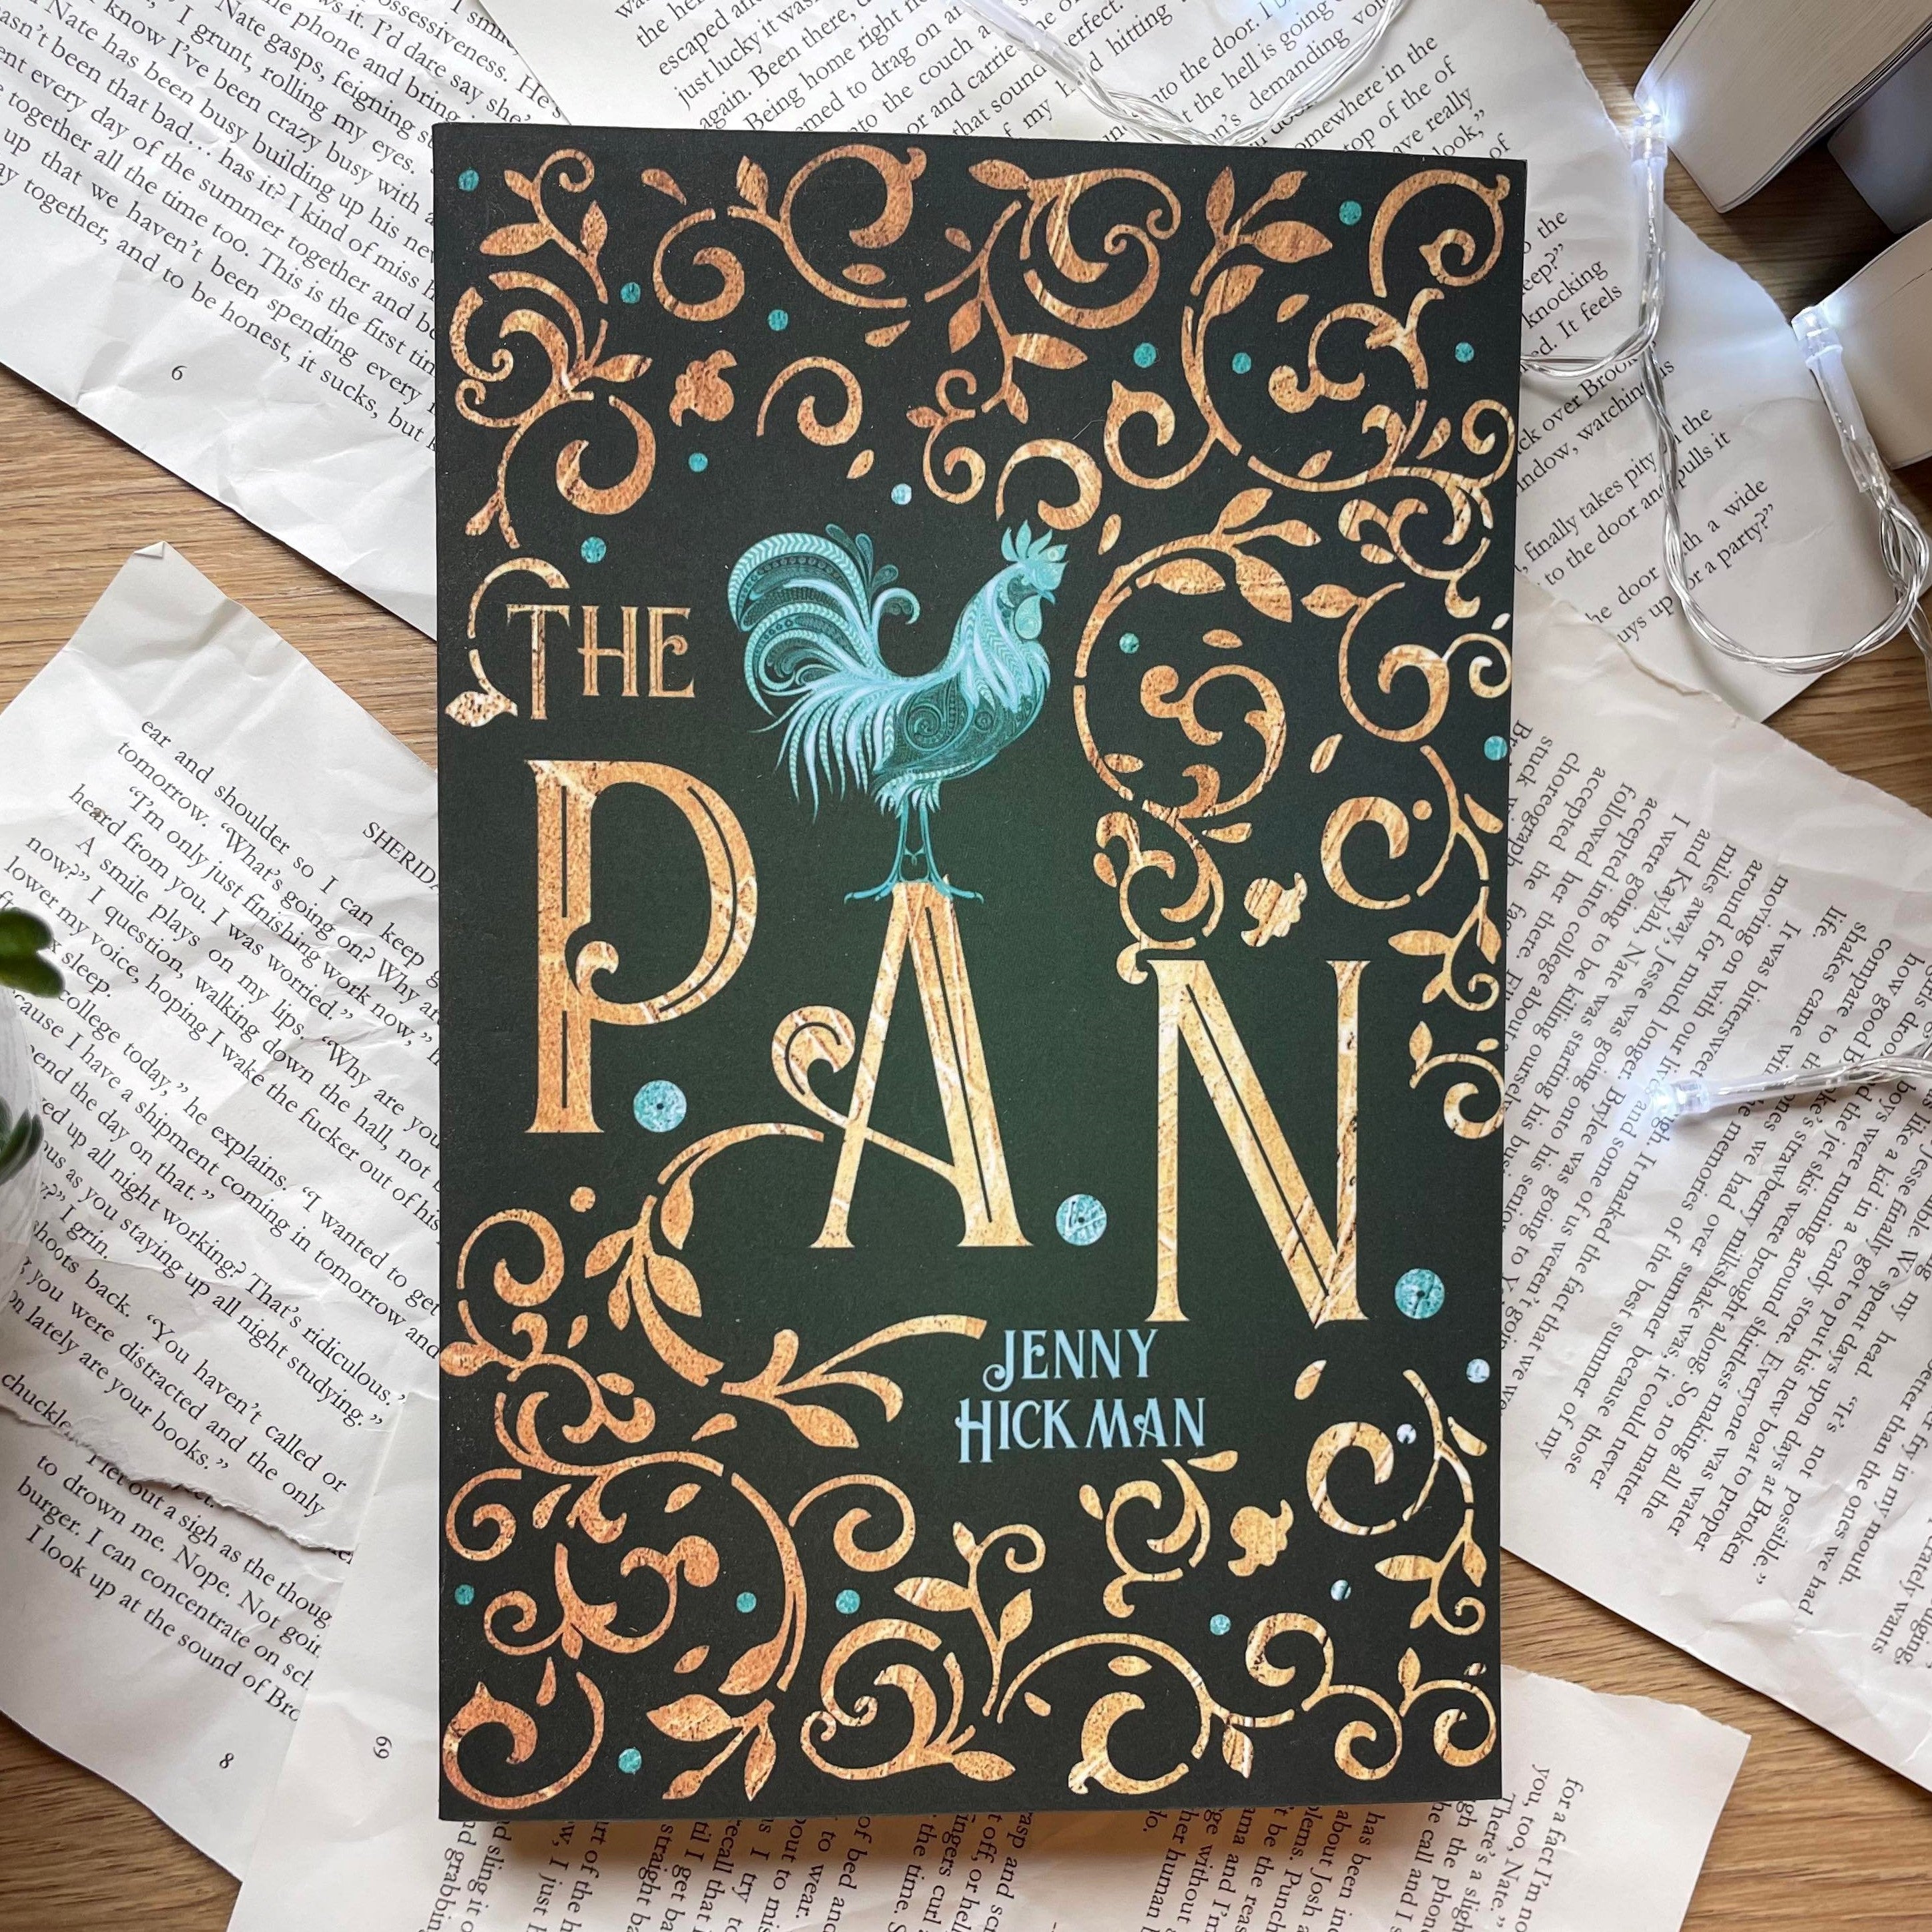 The PAN Trilogy by Jenny Hickman